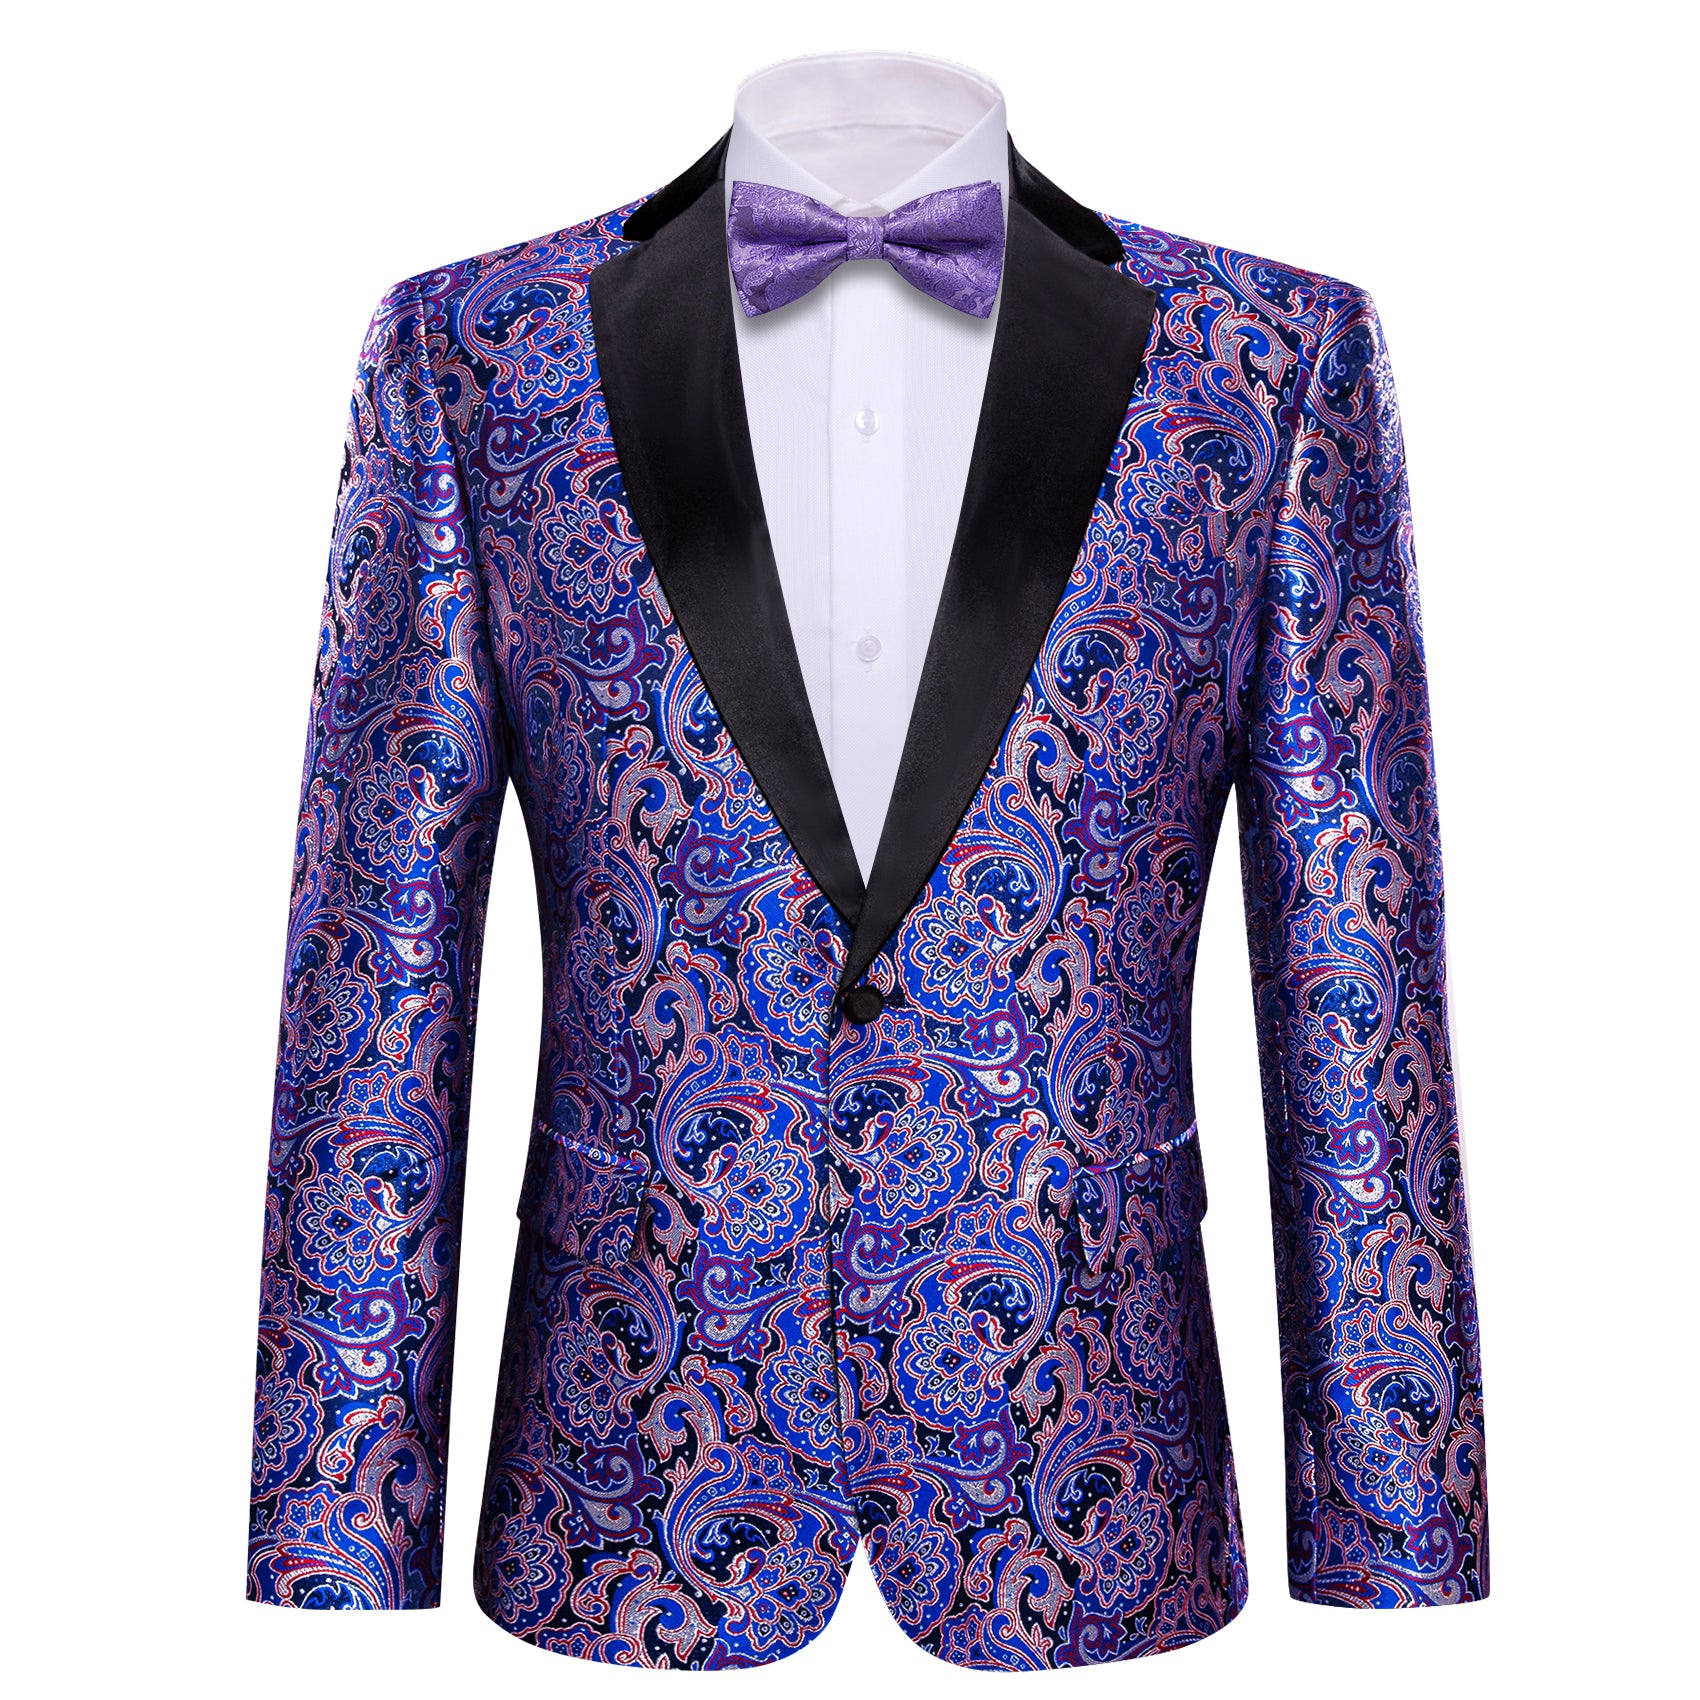 Men's Dress Party Hyacinth Floral Suit Jacket Slim One Button Stylish Blazer